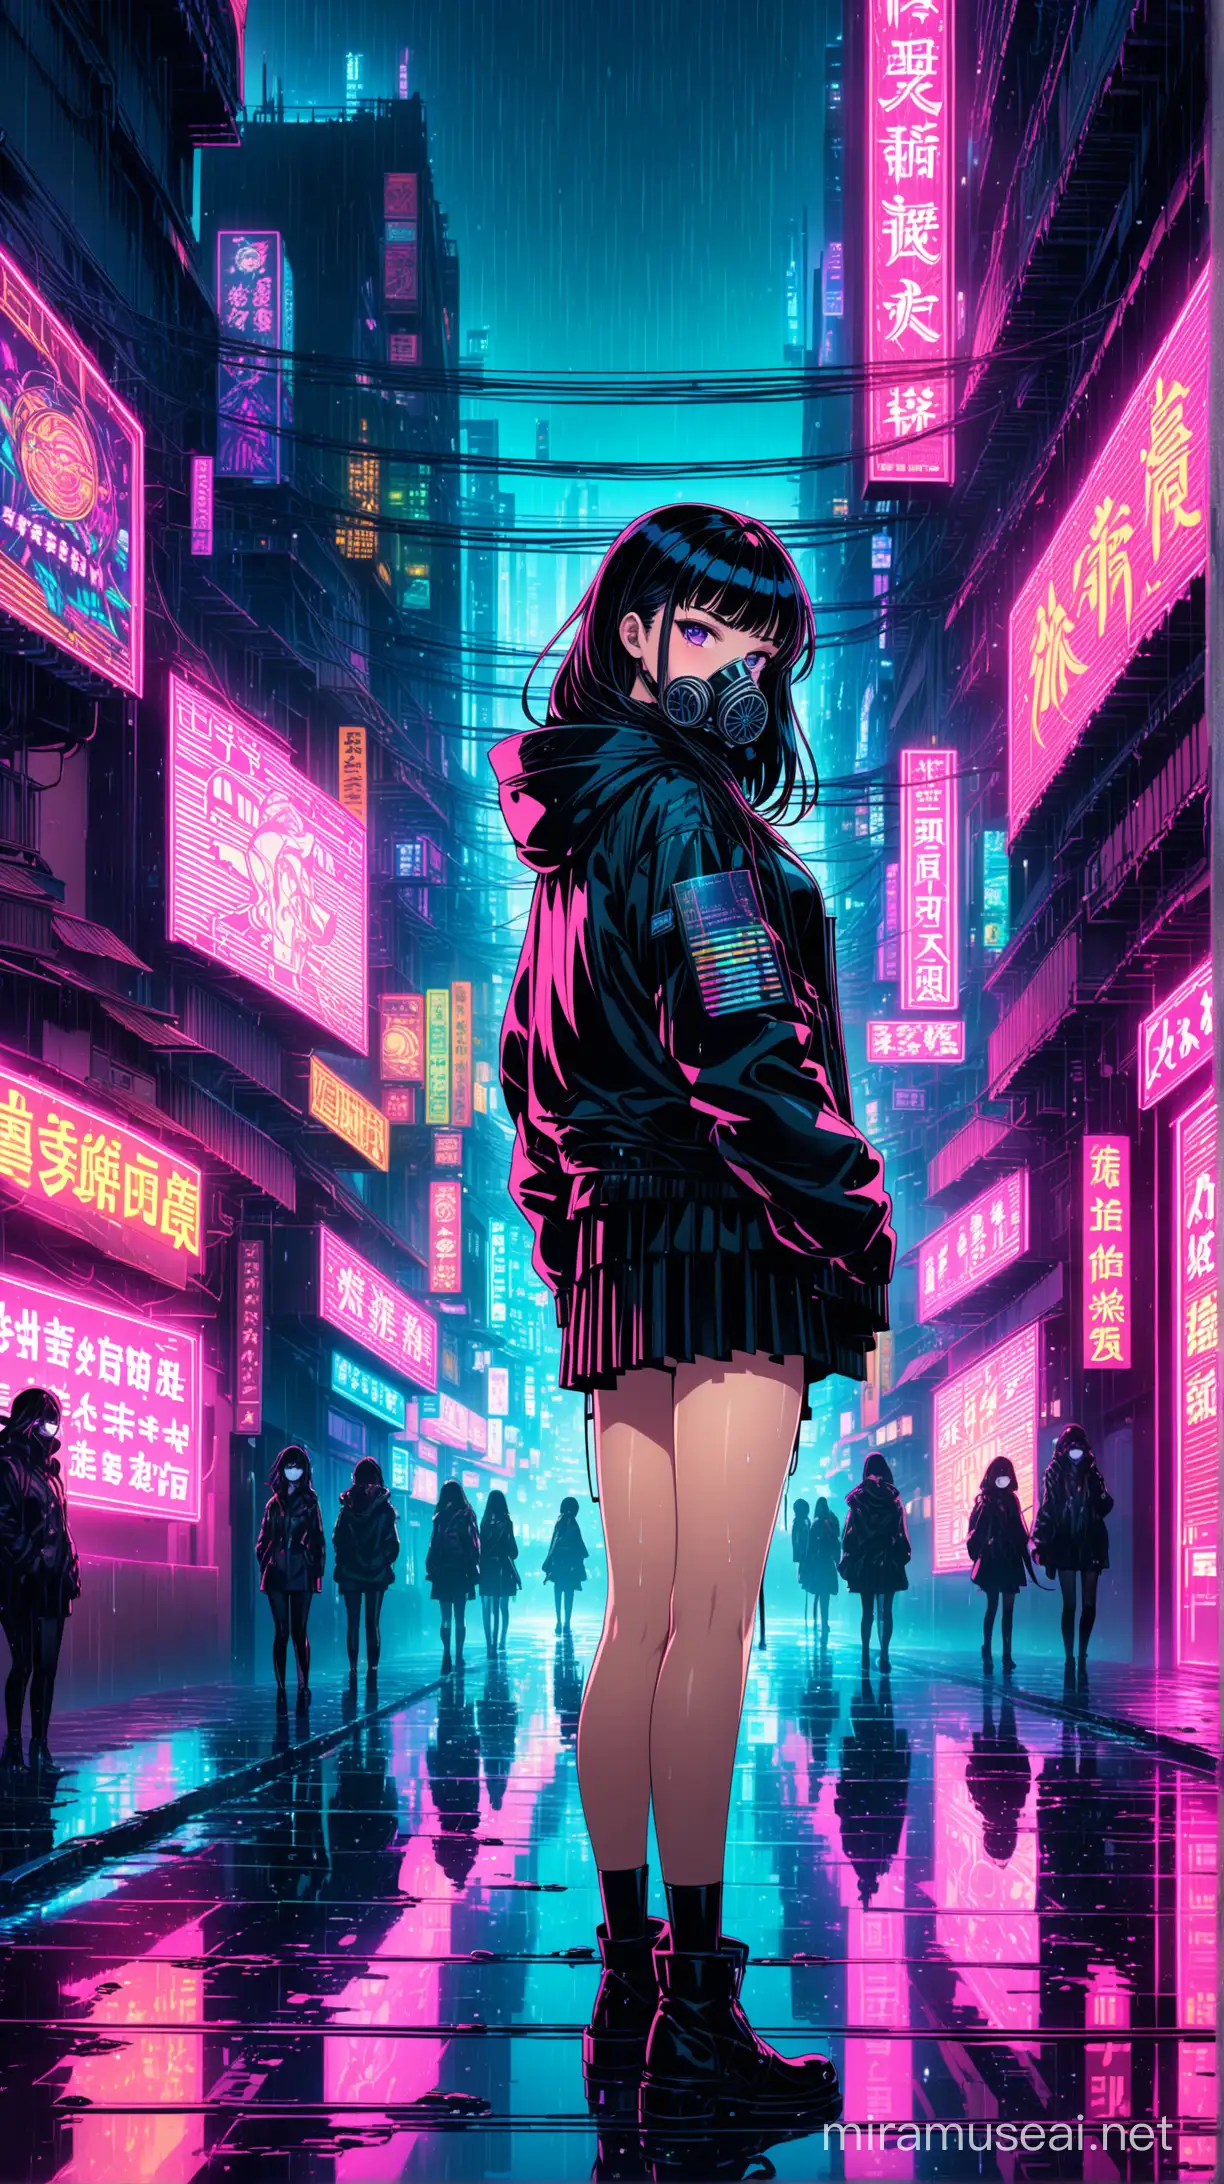 Futuristic Cyberpunk Anime Ethereal School Girl amidst Neon Cityscape